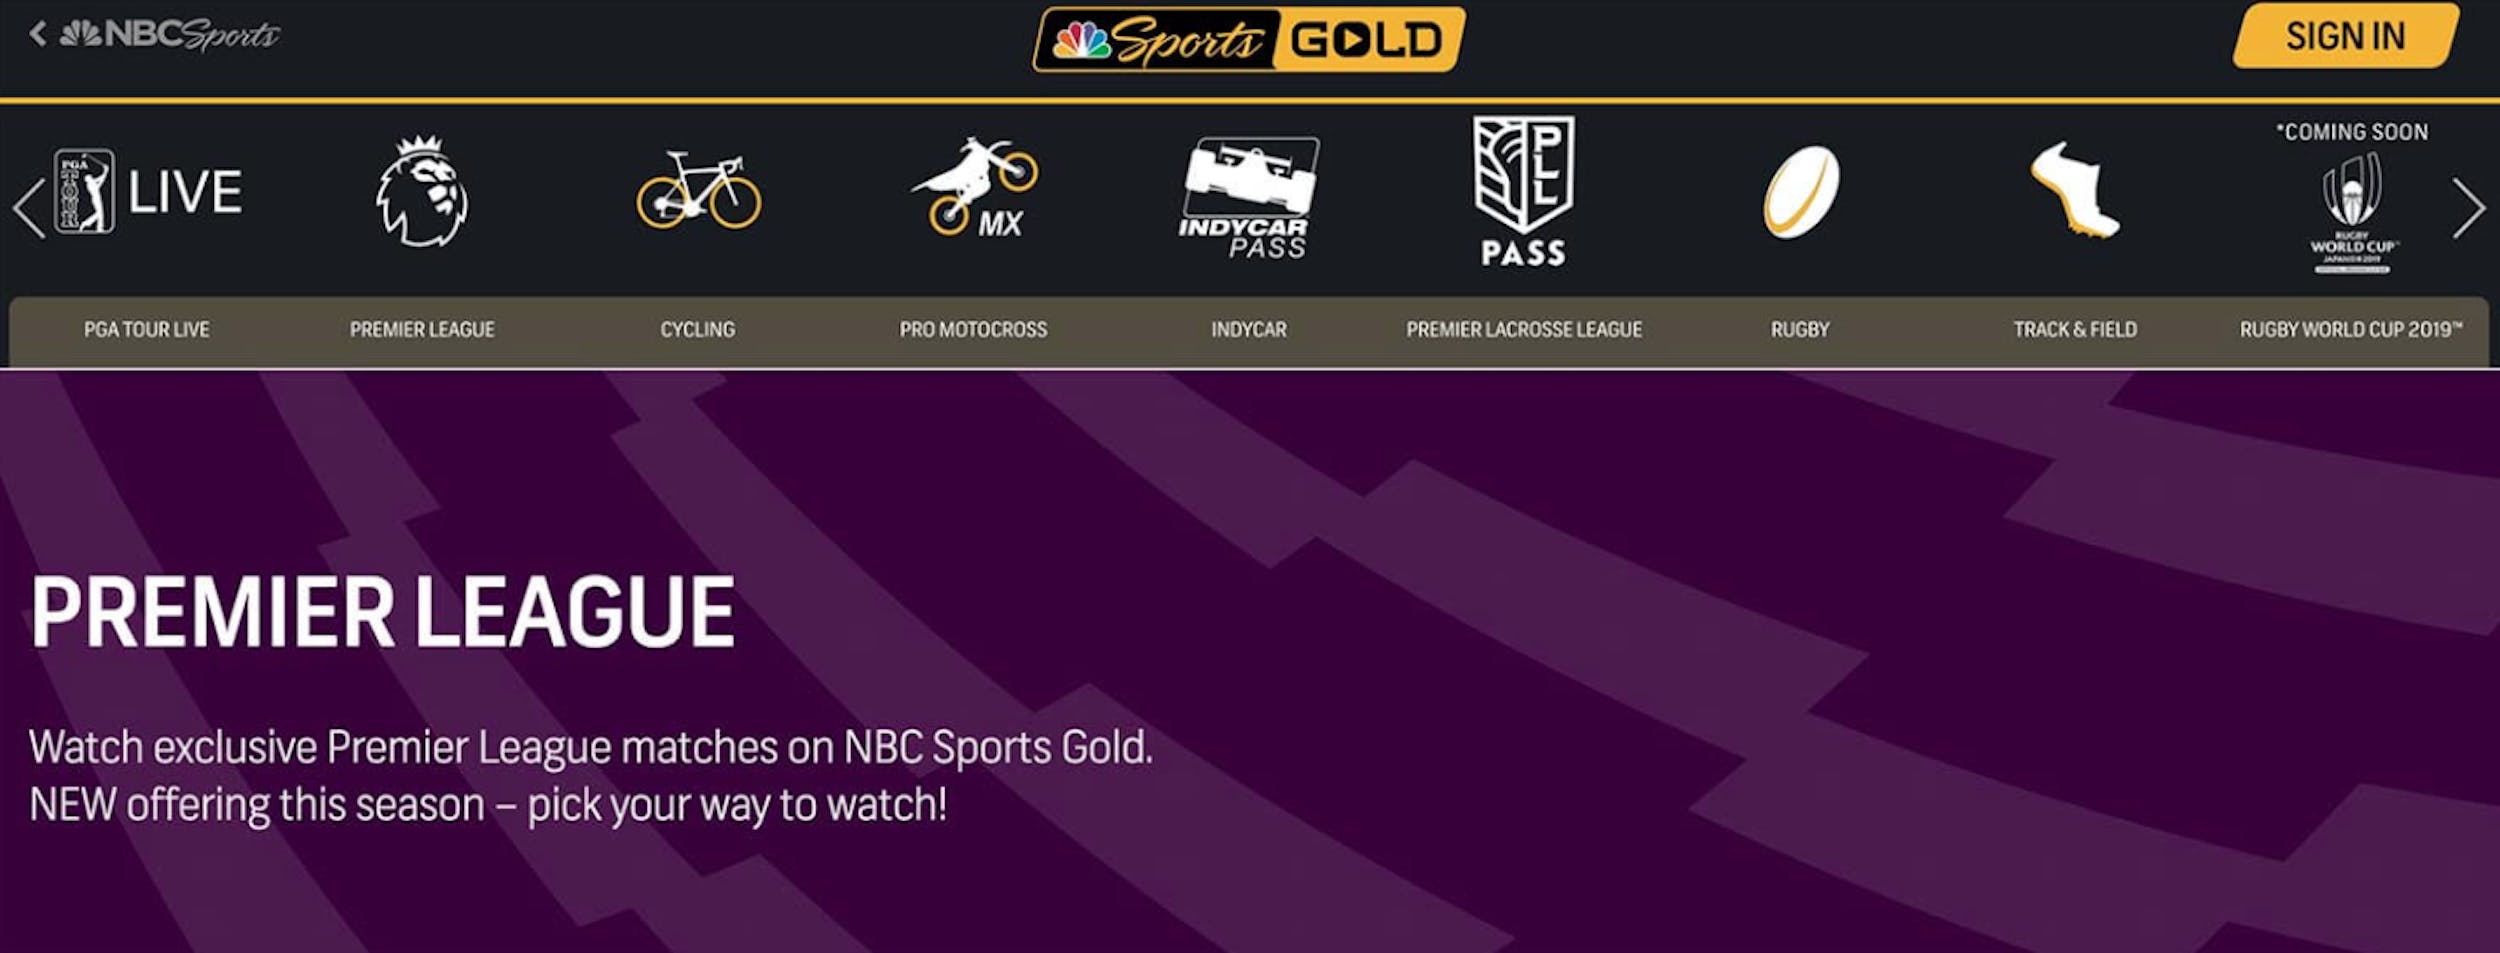 man united vs norwich city live stream NBC sports gold